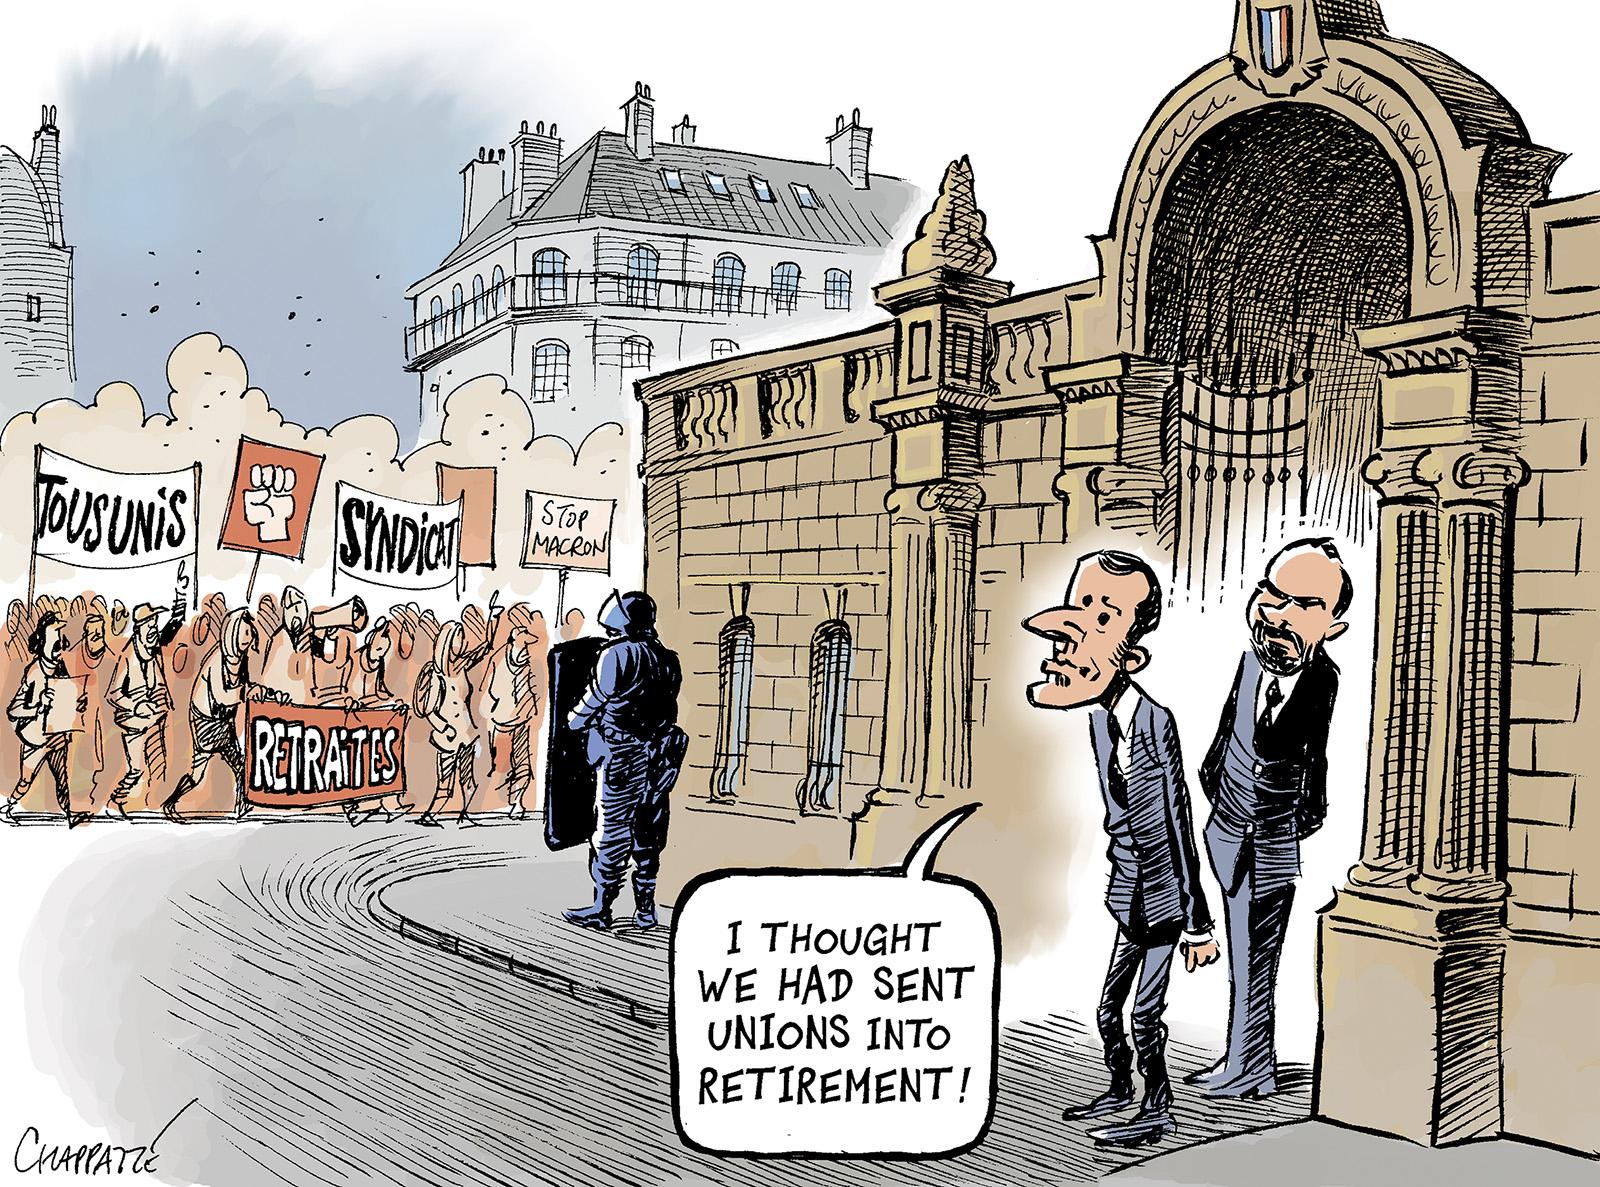 Pension reform protests in France